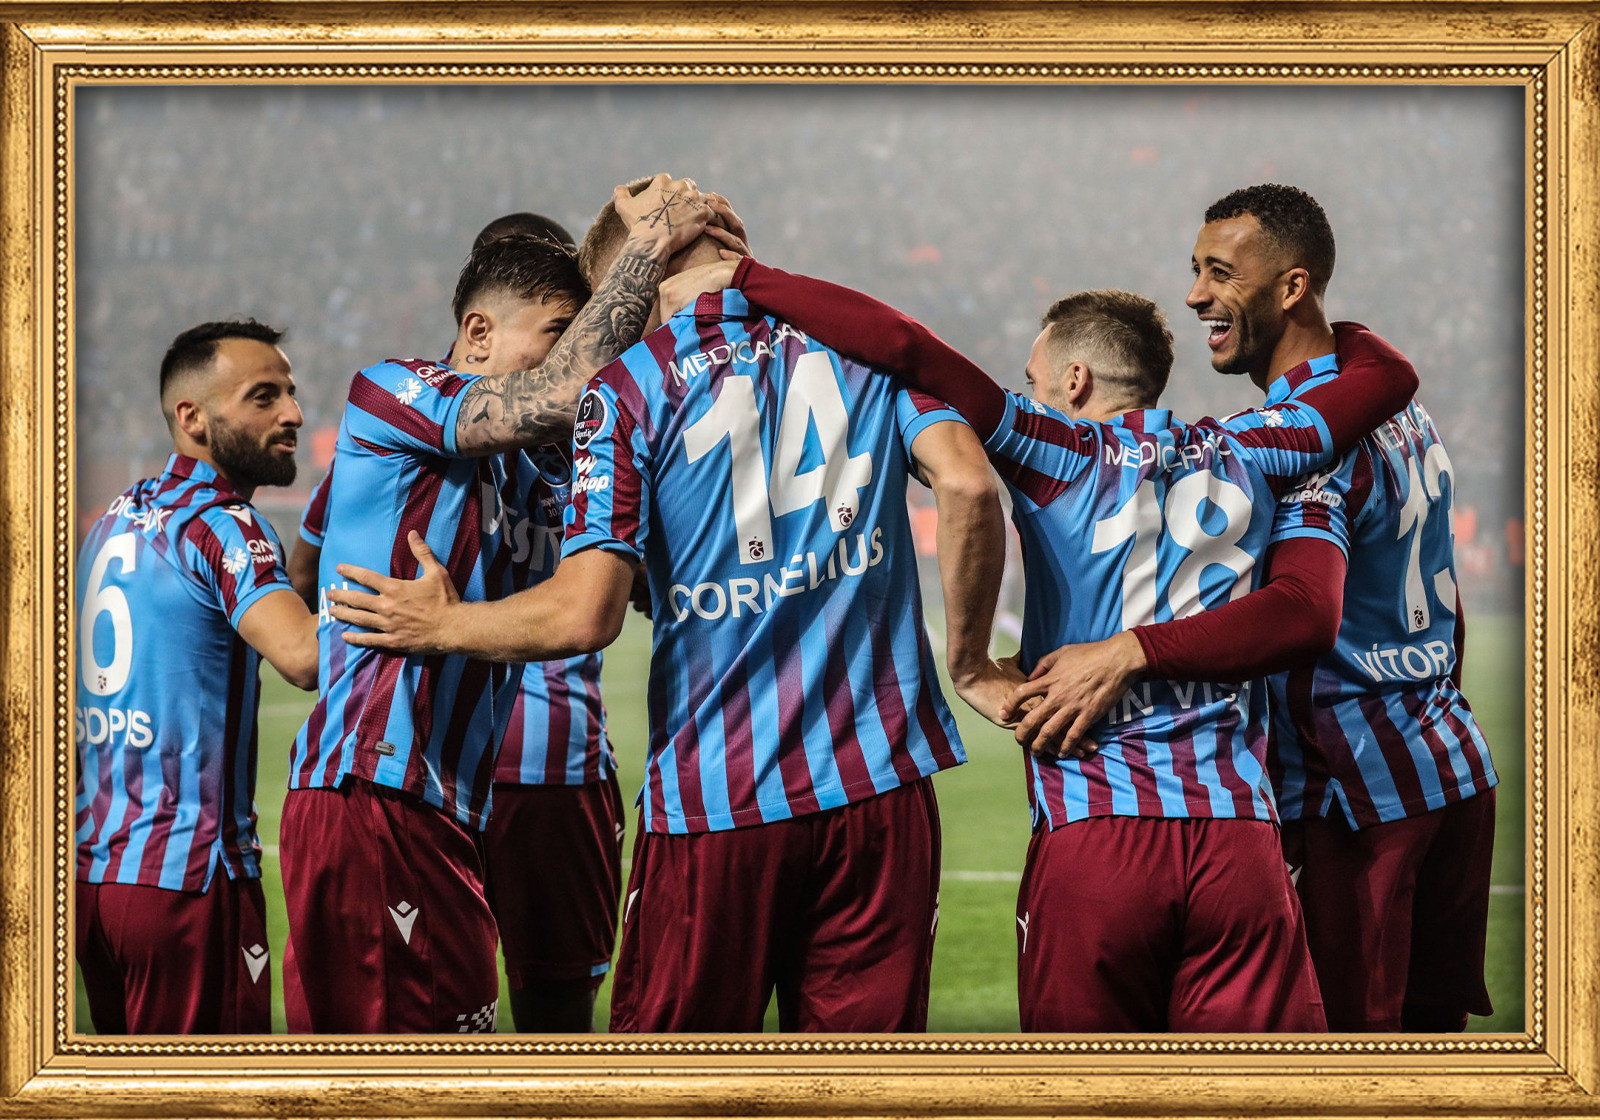 Trabzonsporlu futbolcuların sevinçleri